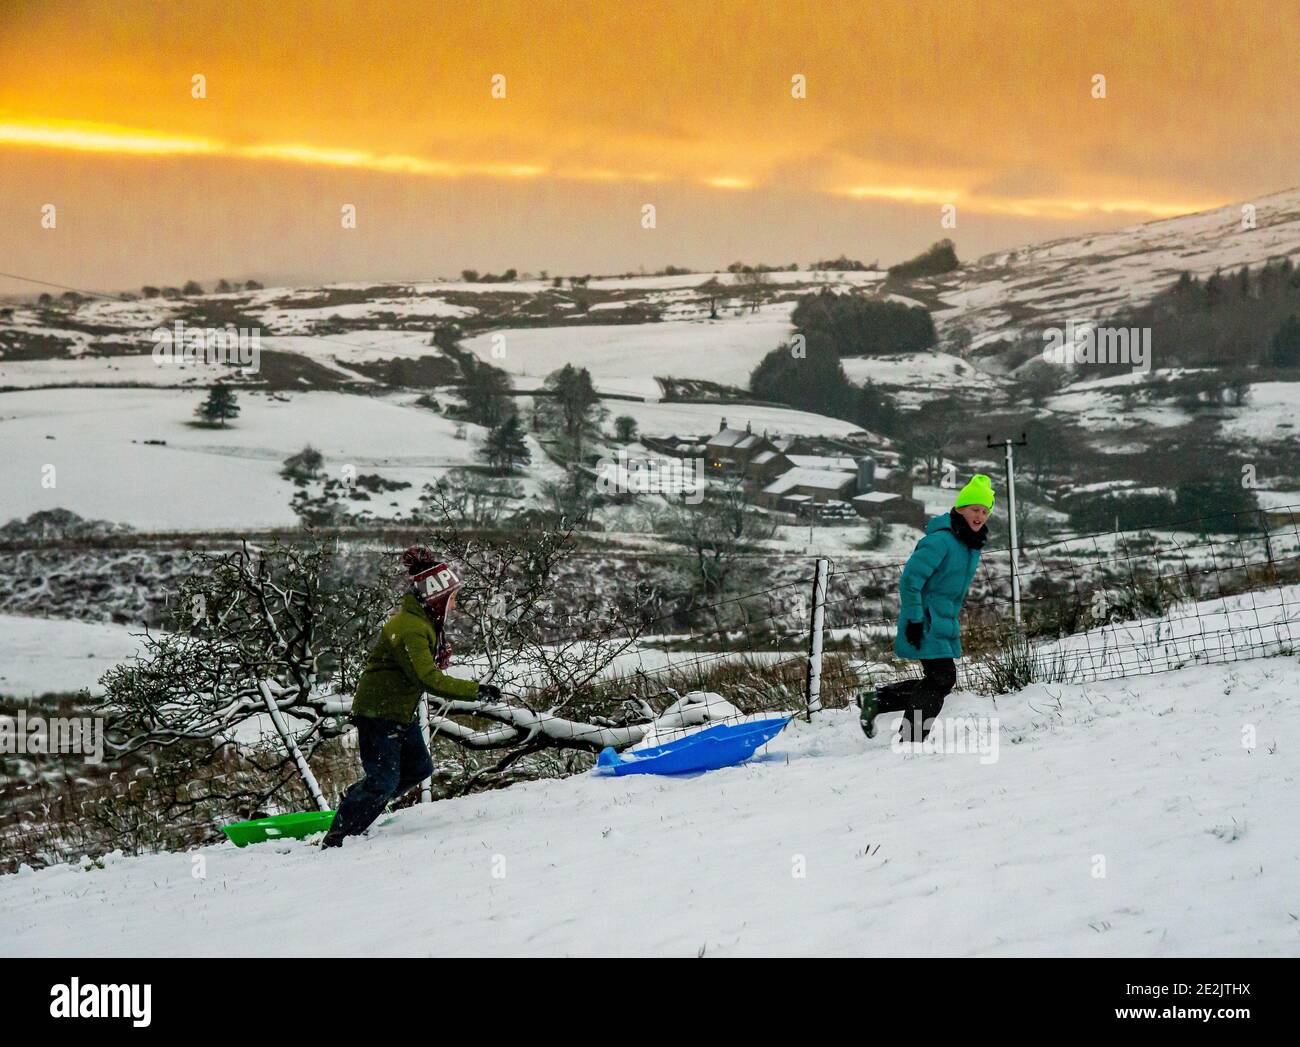 Preston, Lancashire, UK. 14th Jan, 2021. Sledging in the snow at sunset in the fells near Preston, Lancashire. Credit: John Eveson/Alamy Live News Stock Photo